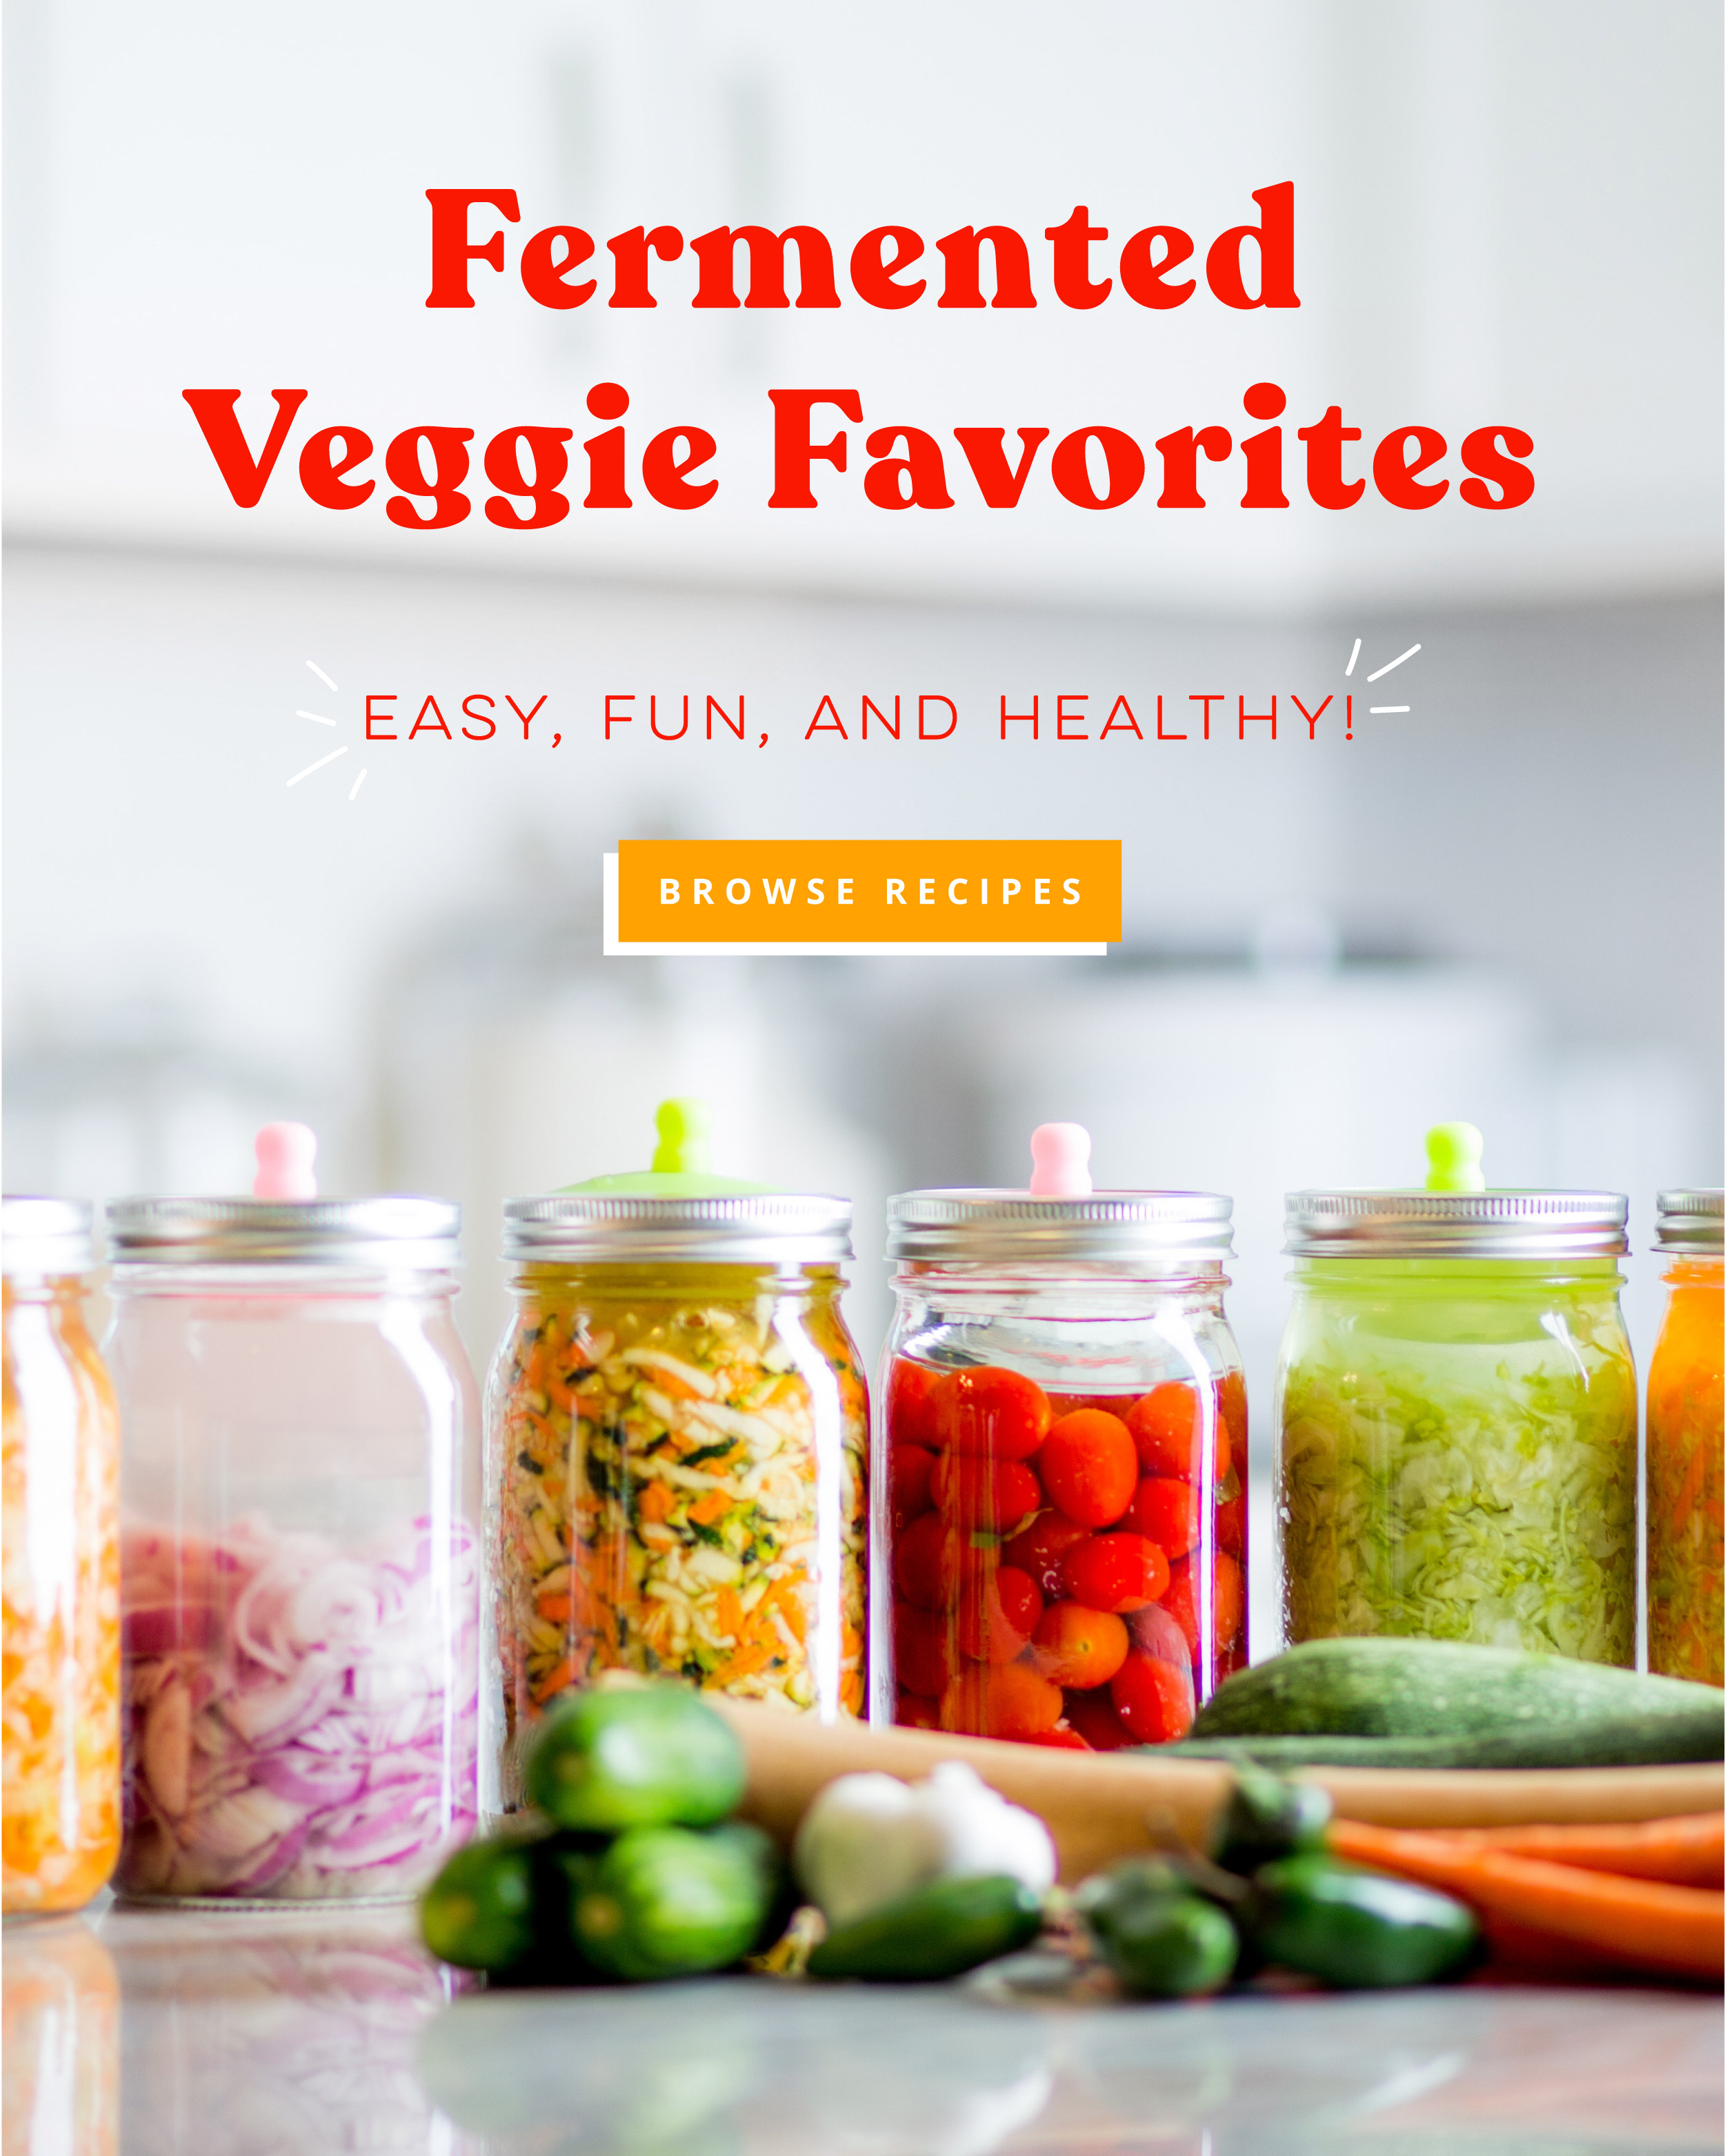 Fermented Veggies